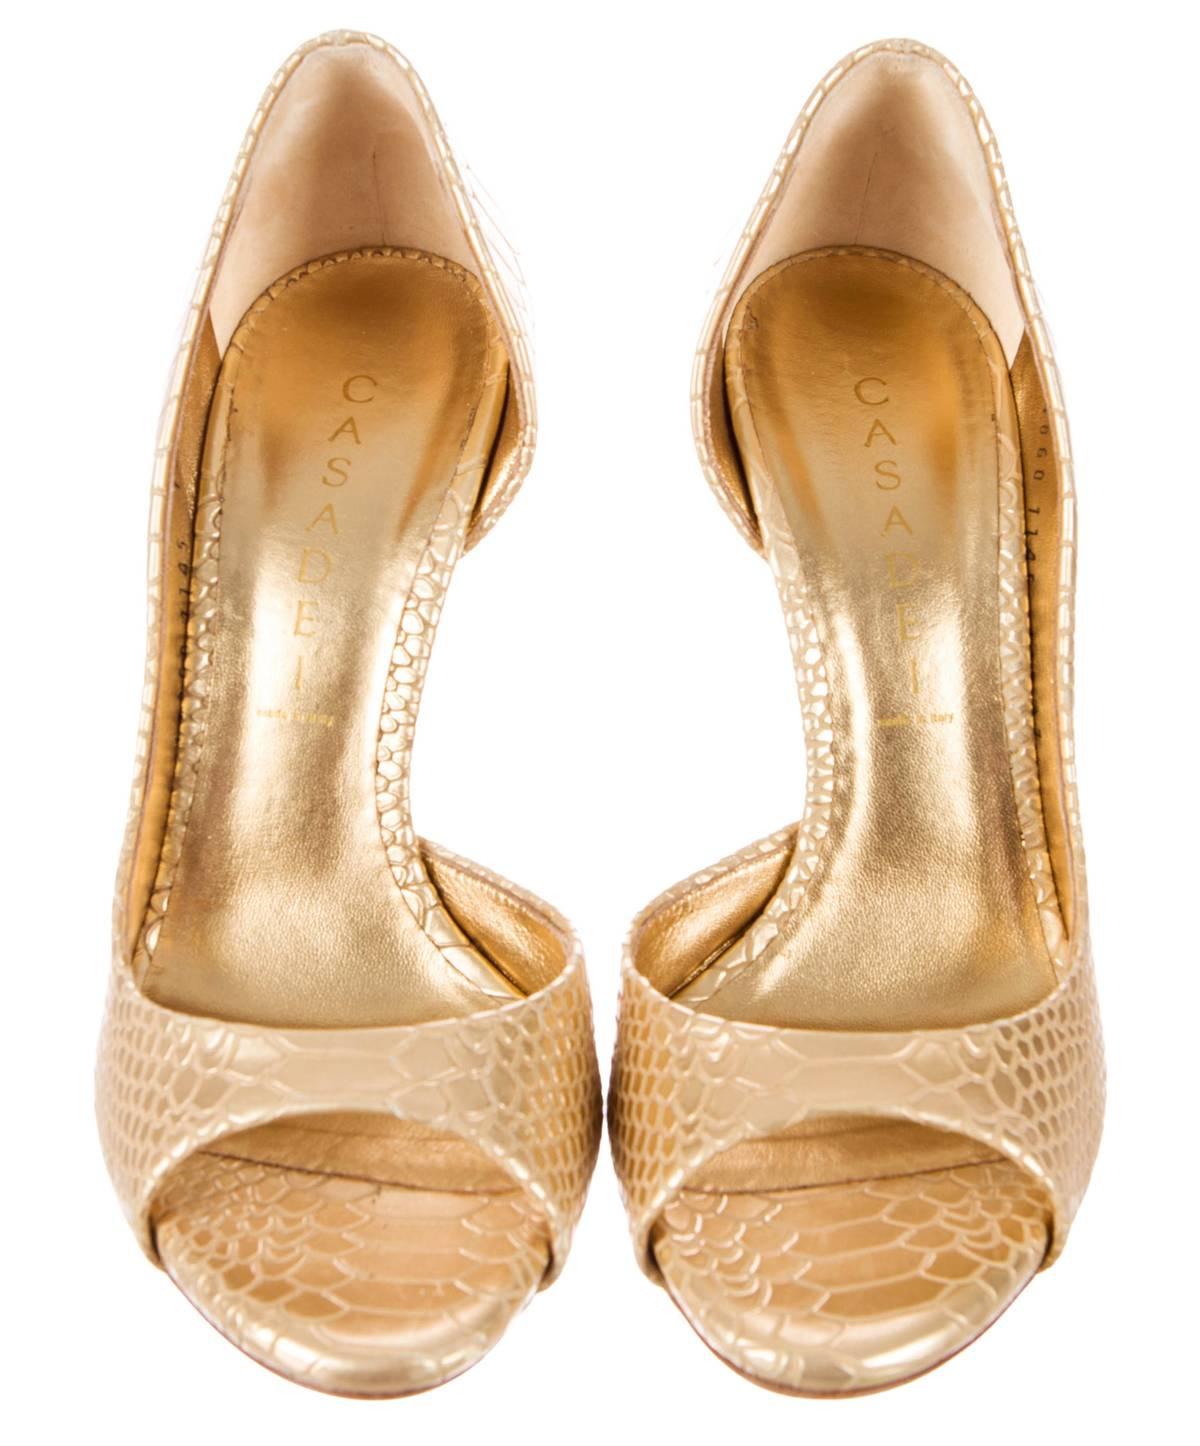 casadei gold heels